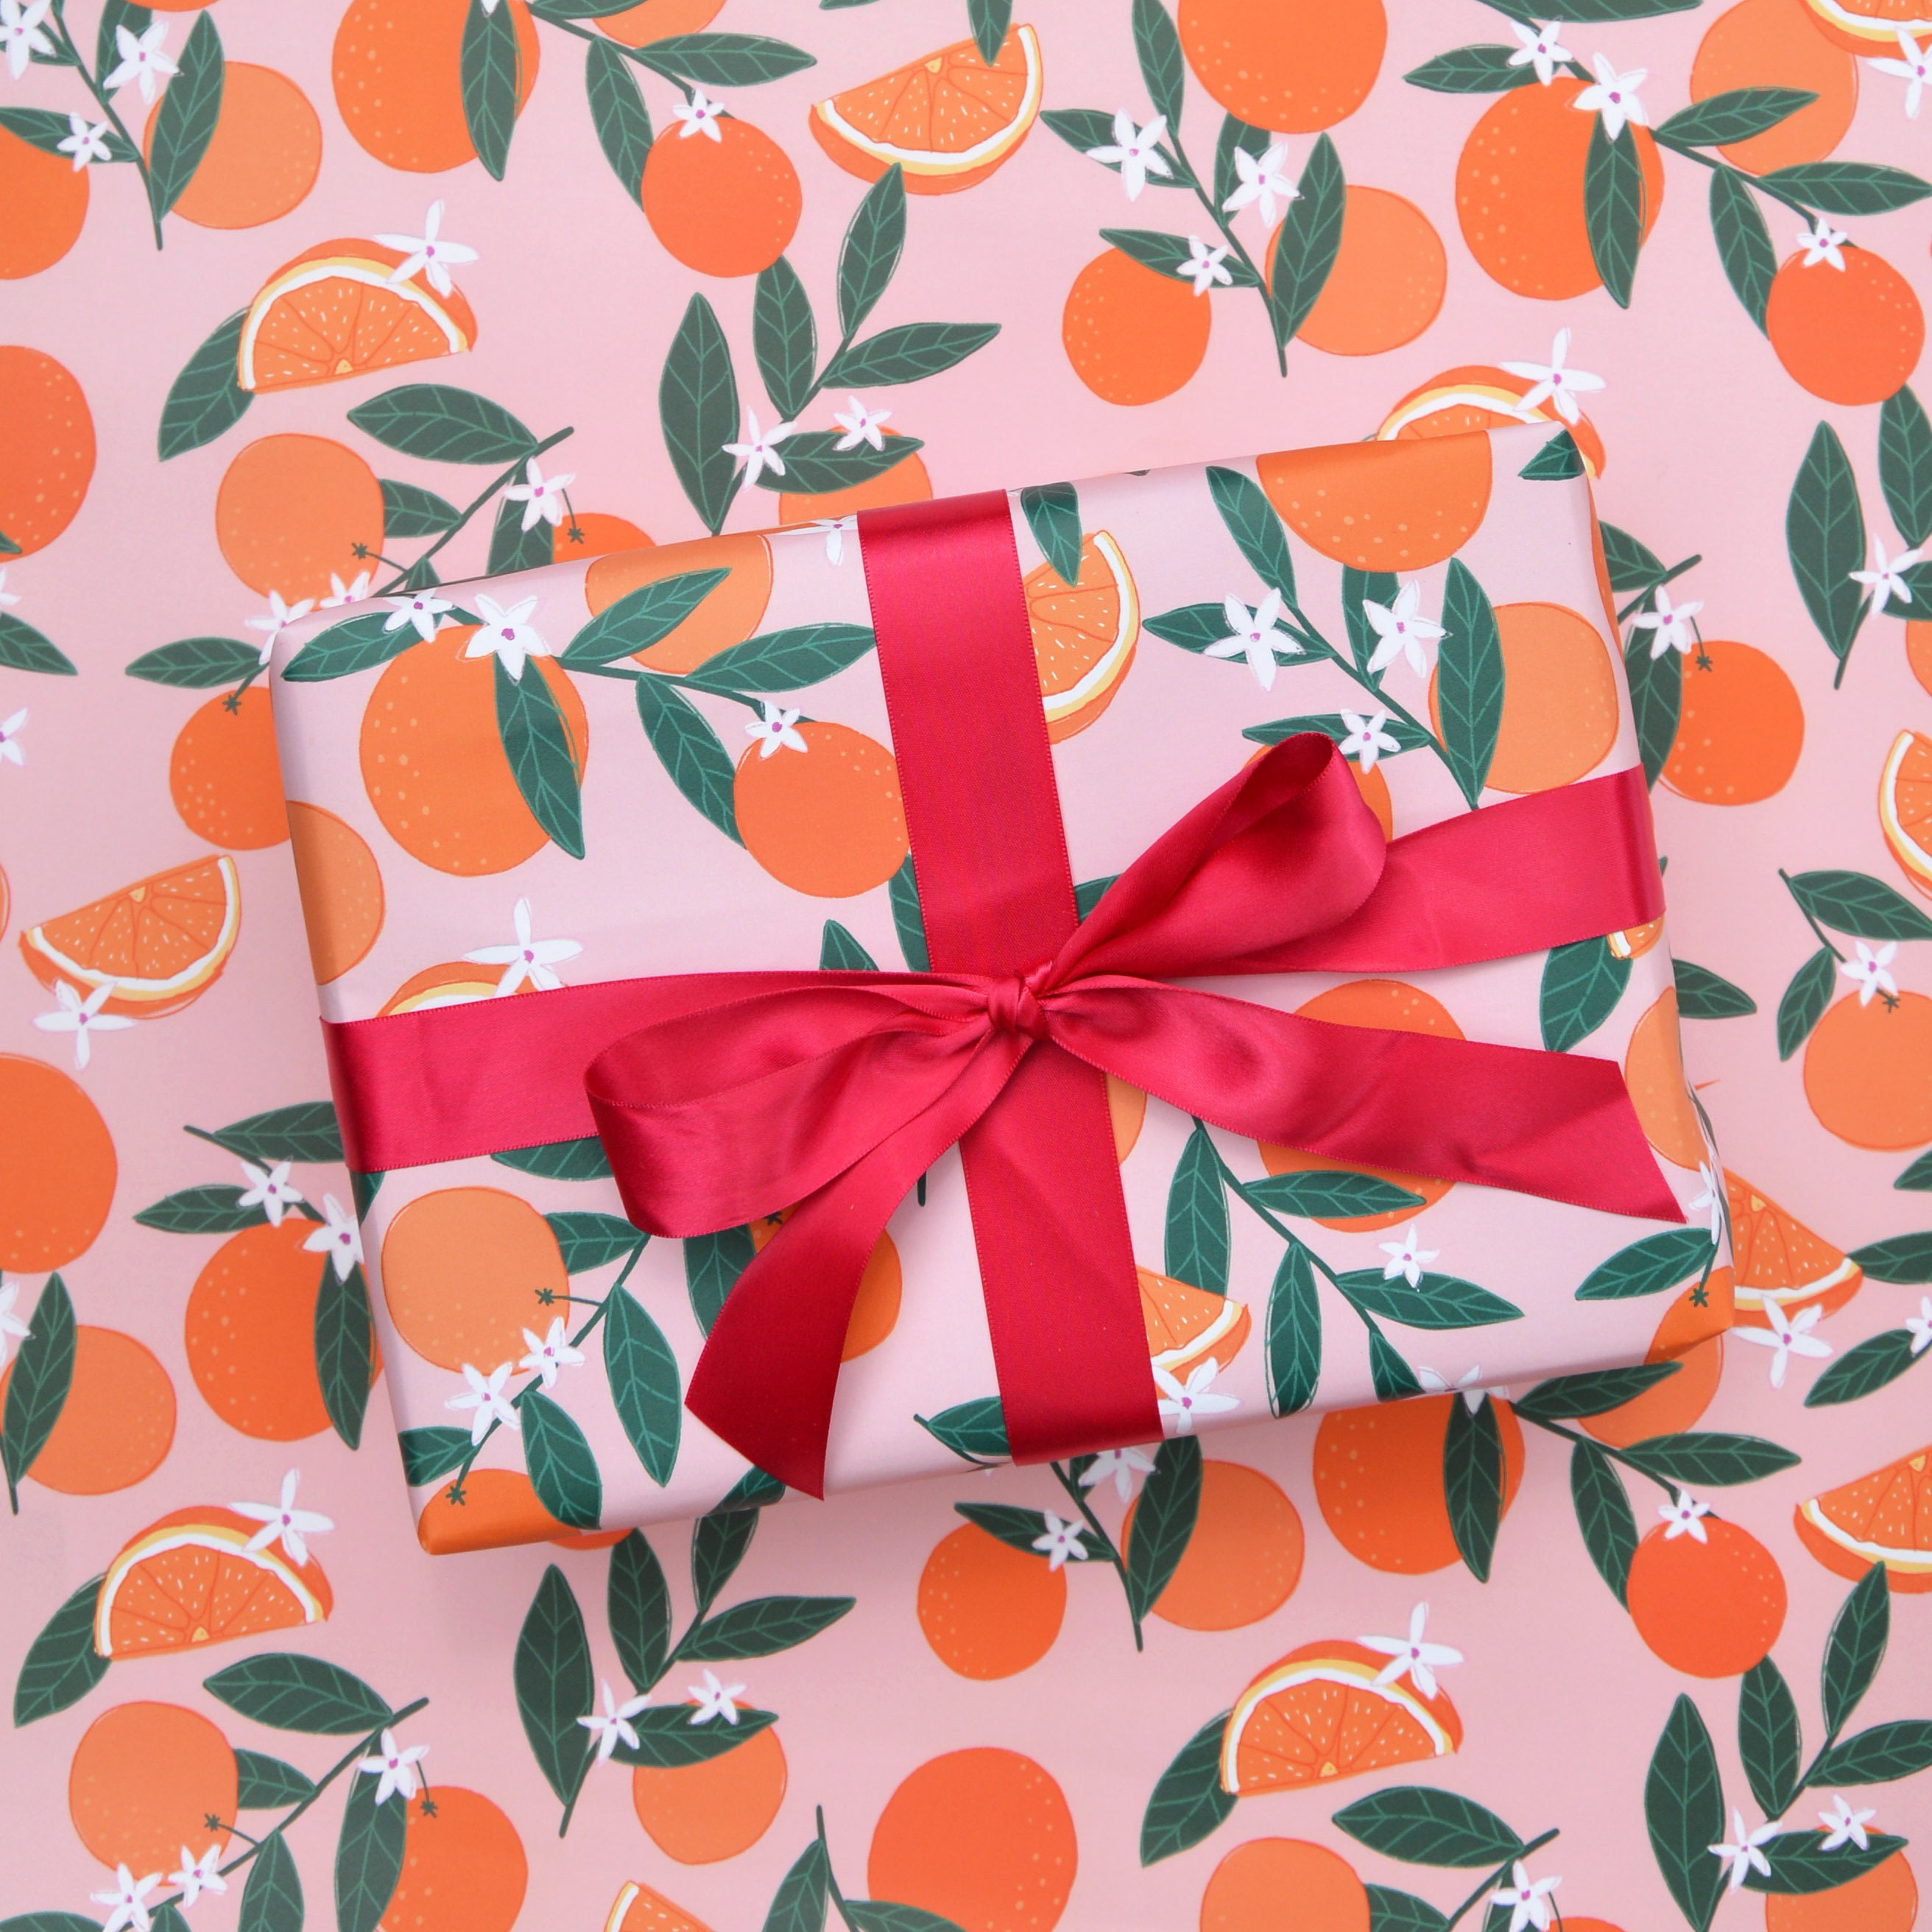 Orange Pumpkin Gift Wrapping Paper Halloween Essential Birthday Celebration  Spooky Jack O Lantern Present Wrap Adults Children 